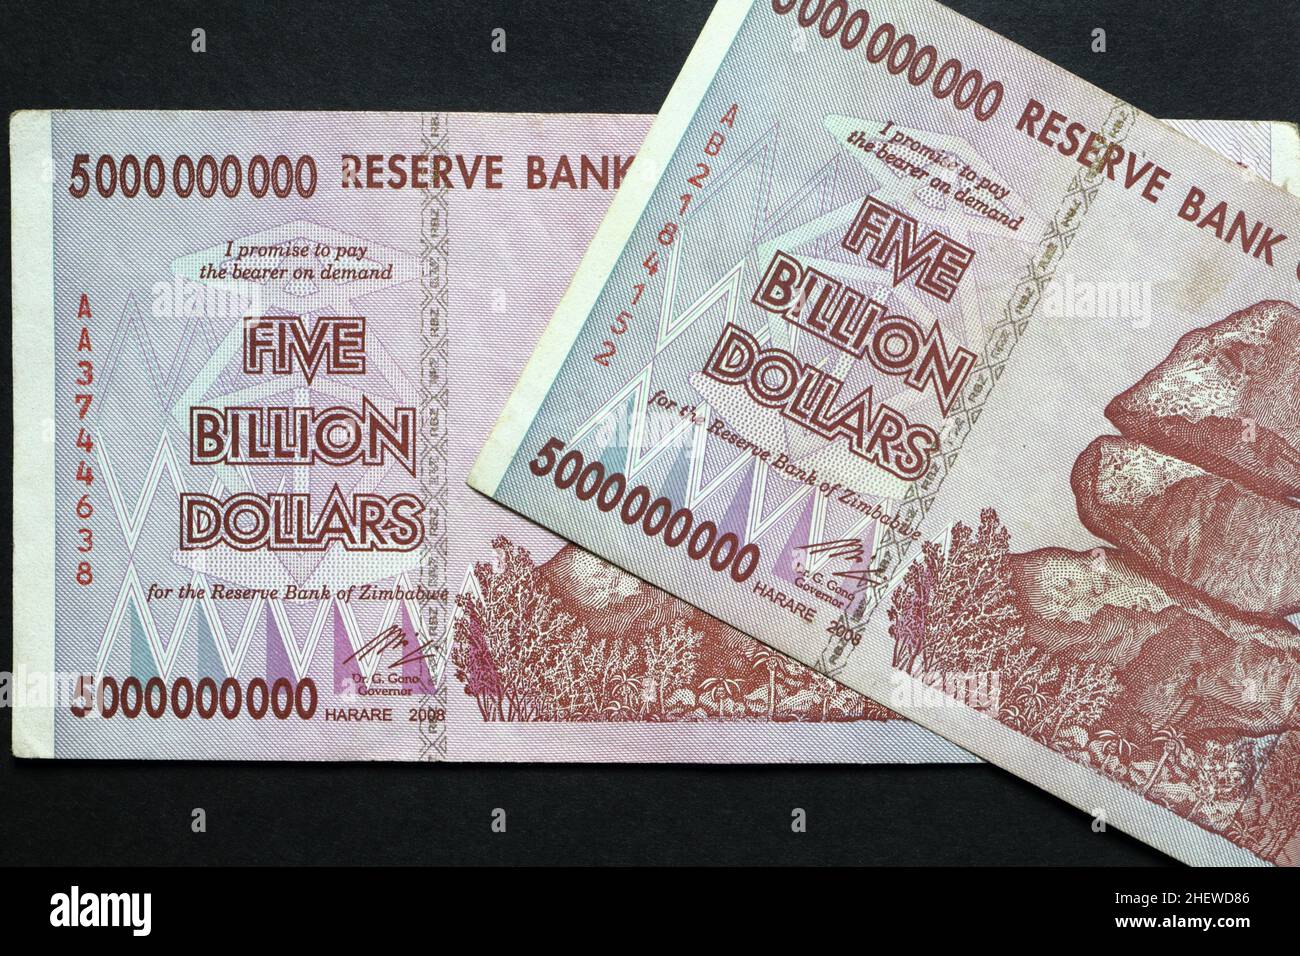 Five Billion Dollars bank notes from Zimbabwe Stock Photo